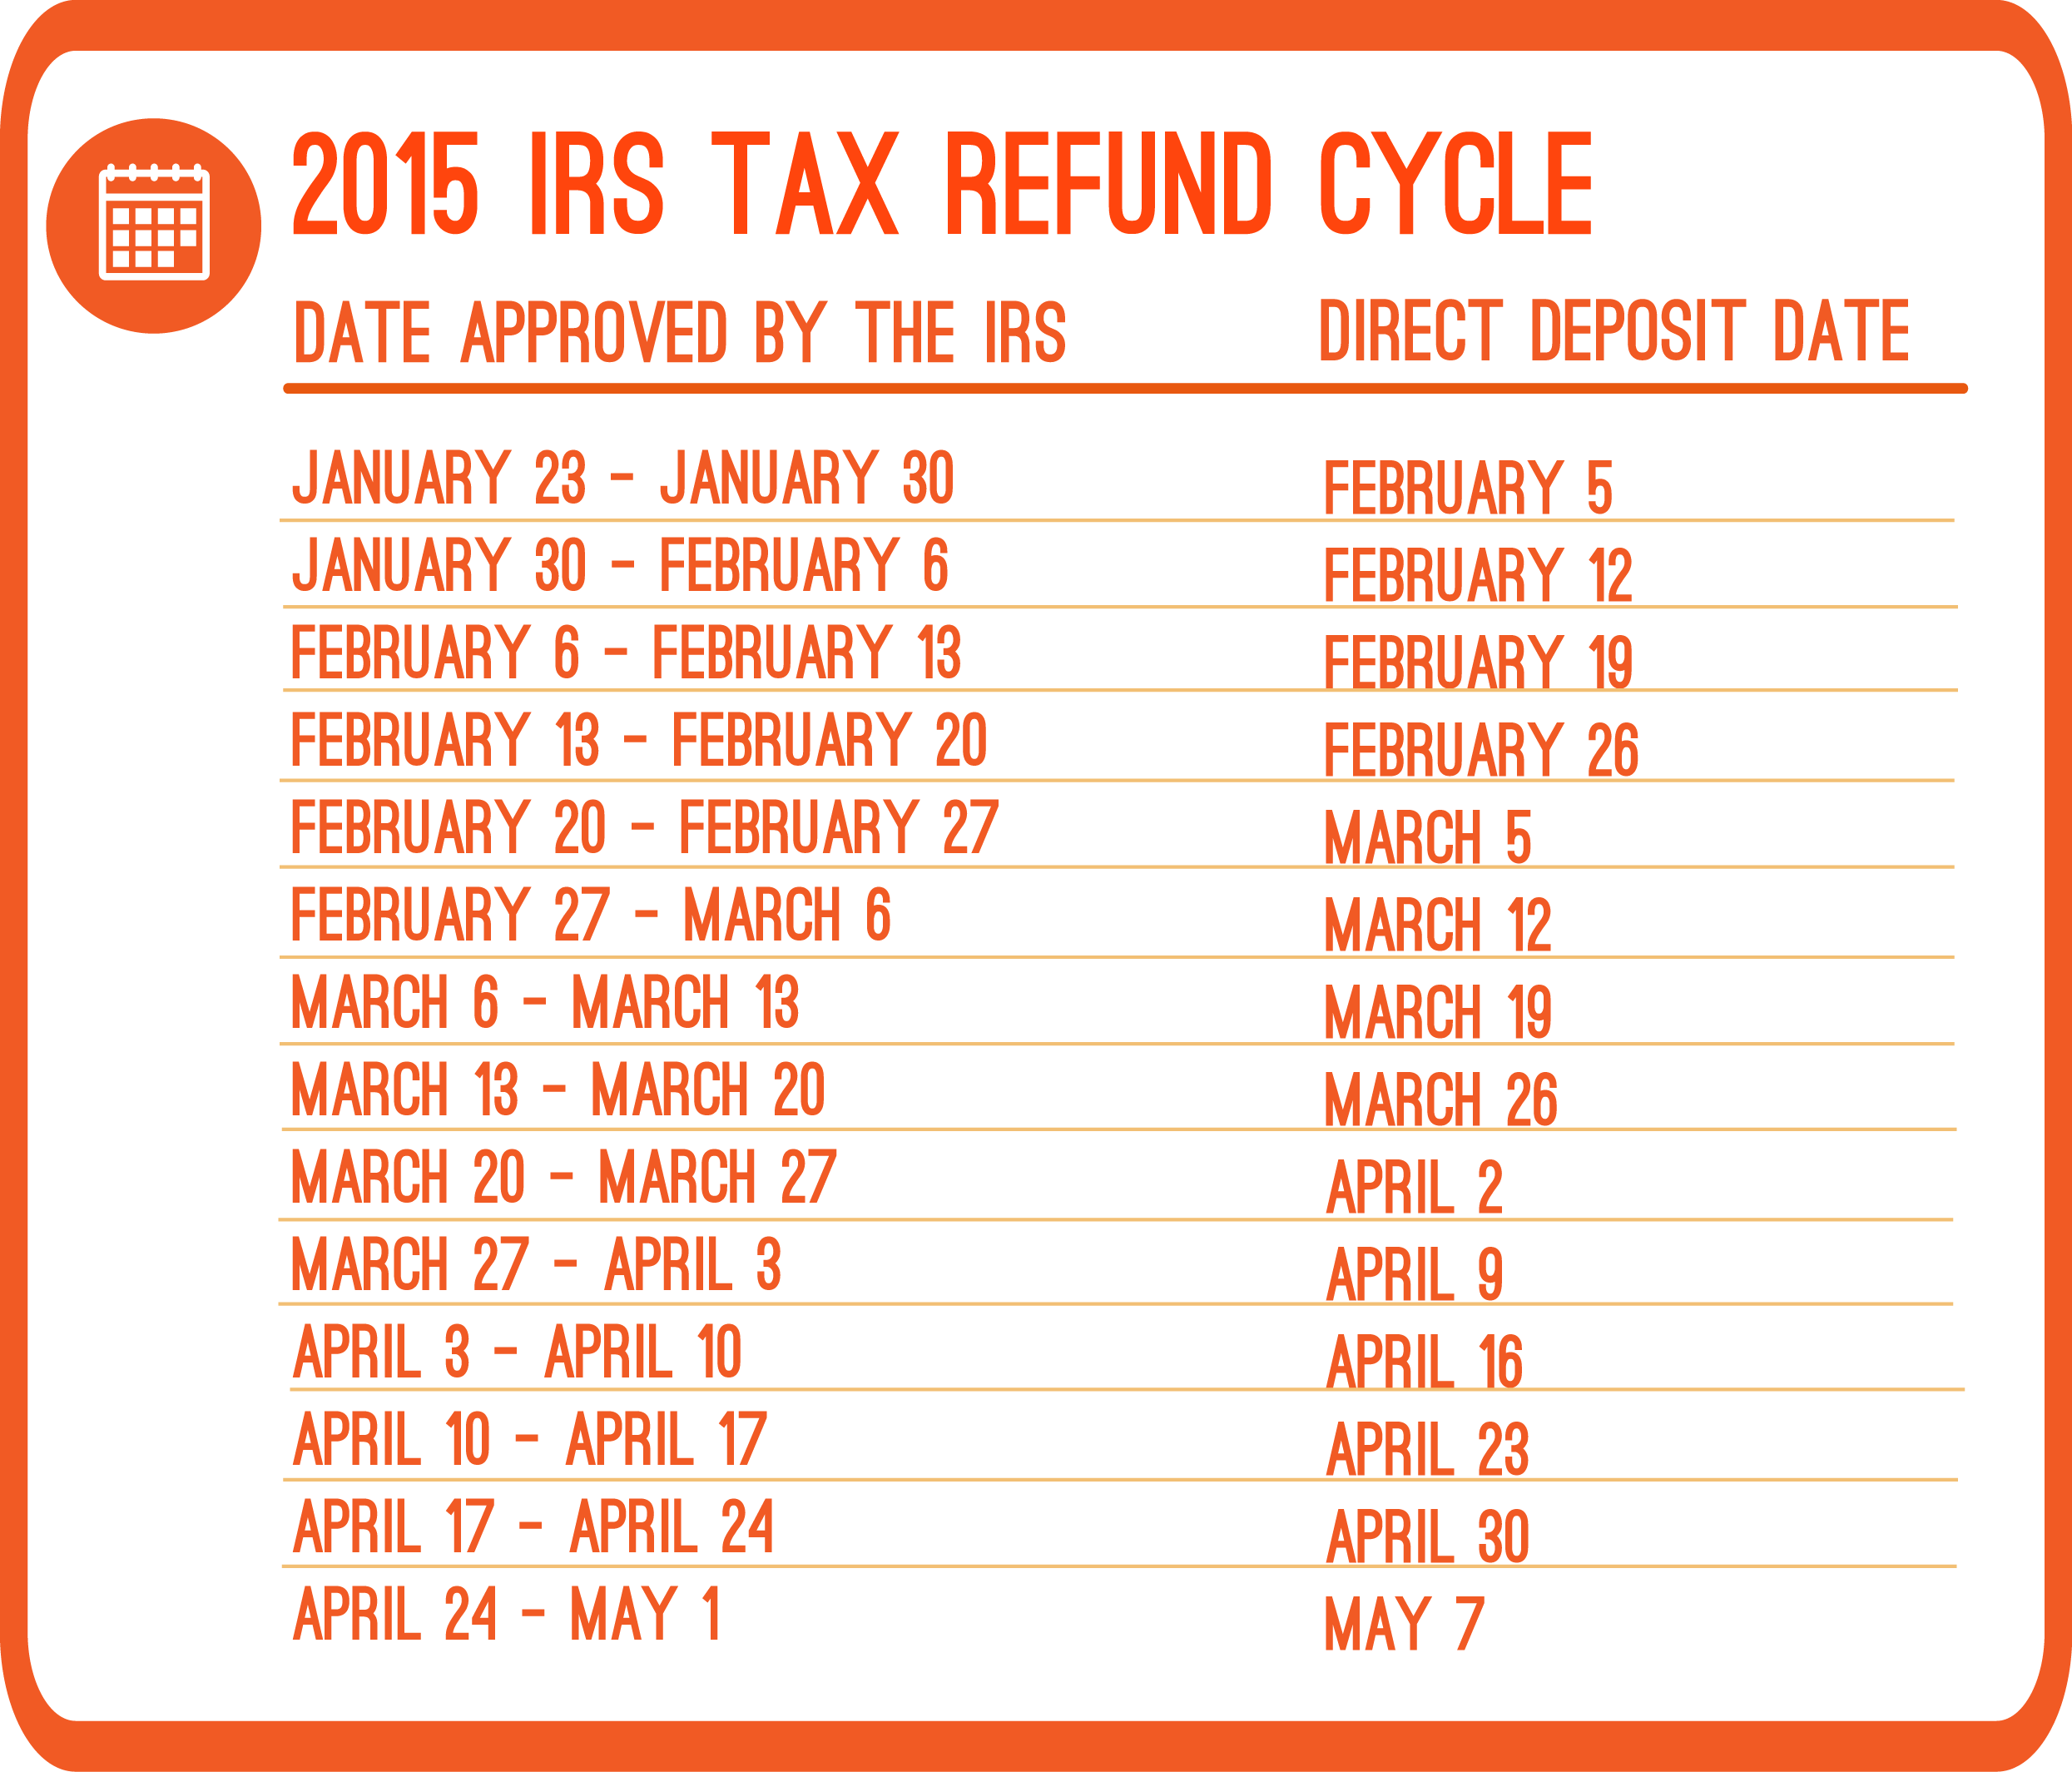 Tax Cycle Chart